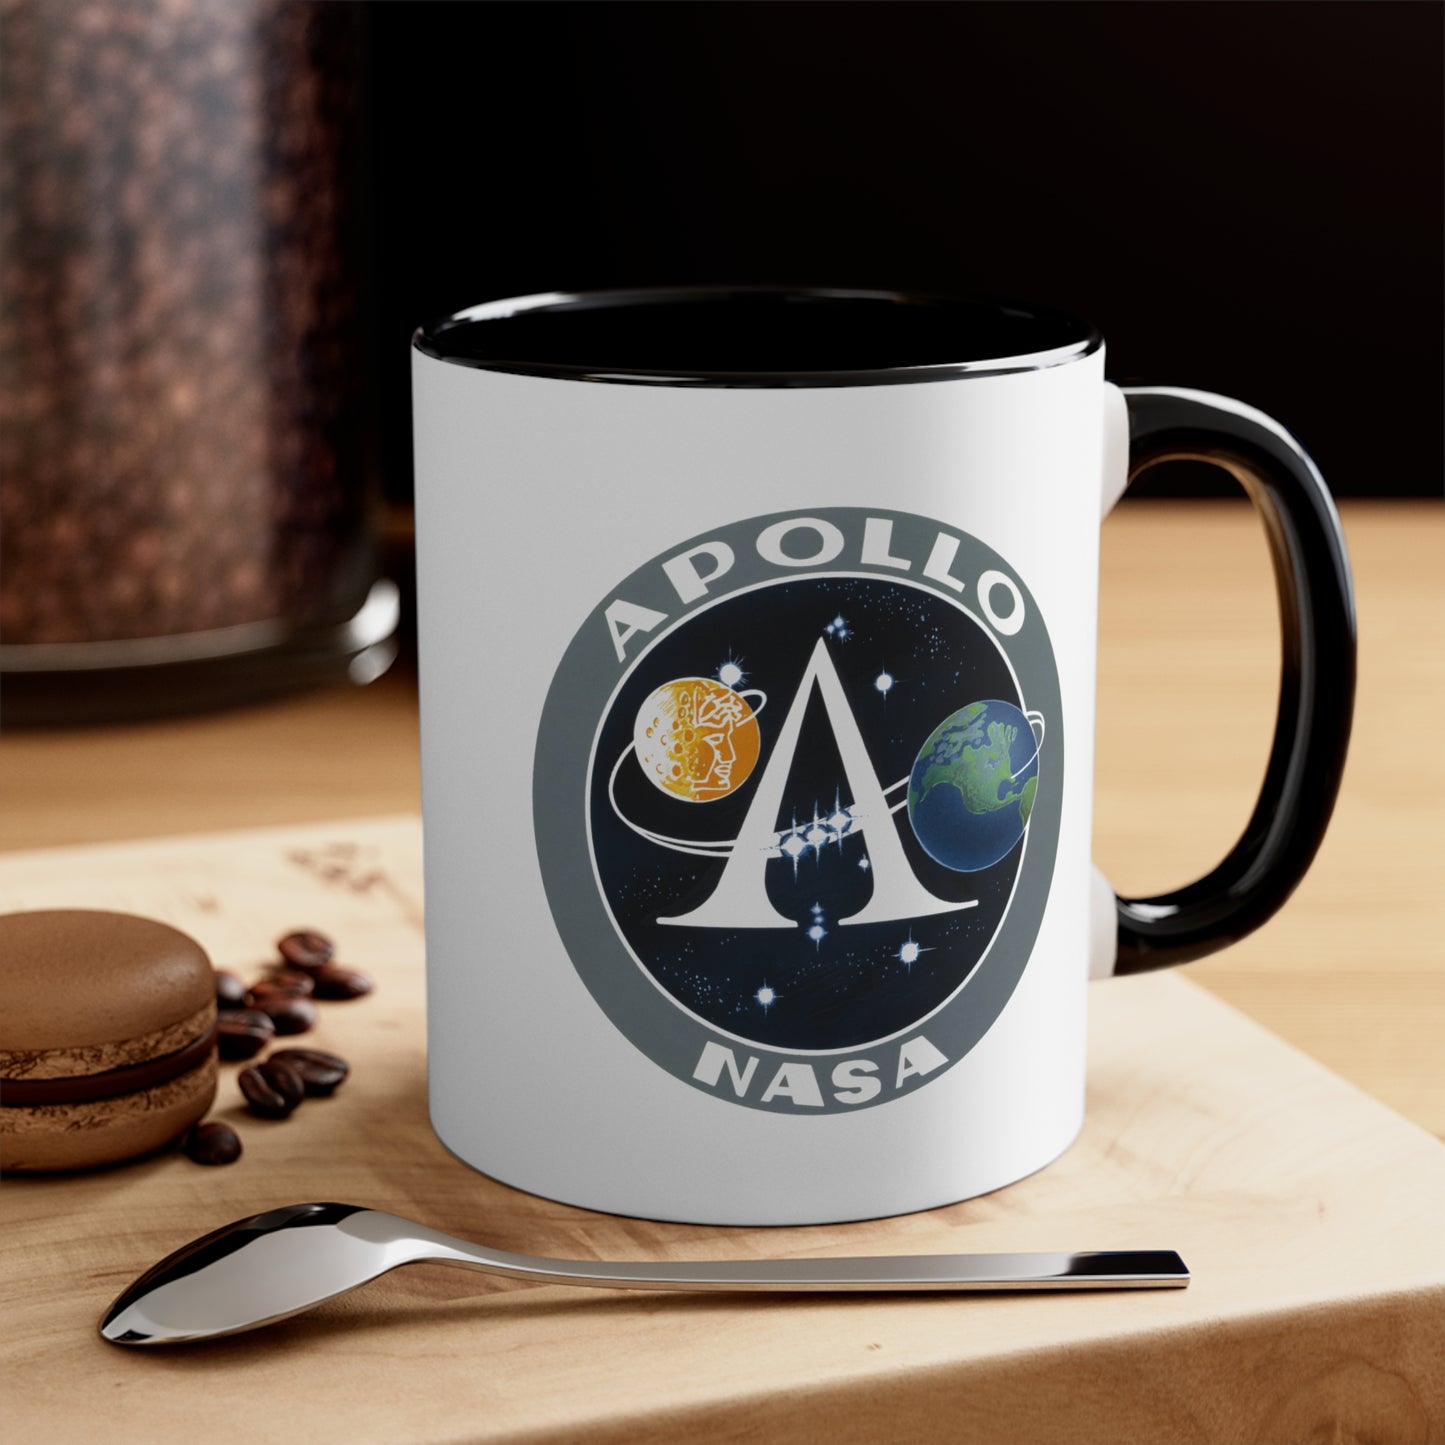 NASA Apollo Program Coffee Mug - Double Sided Black Accent White Ceramic 11oz by TheGlassyLass